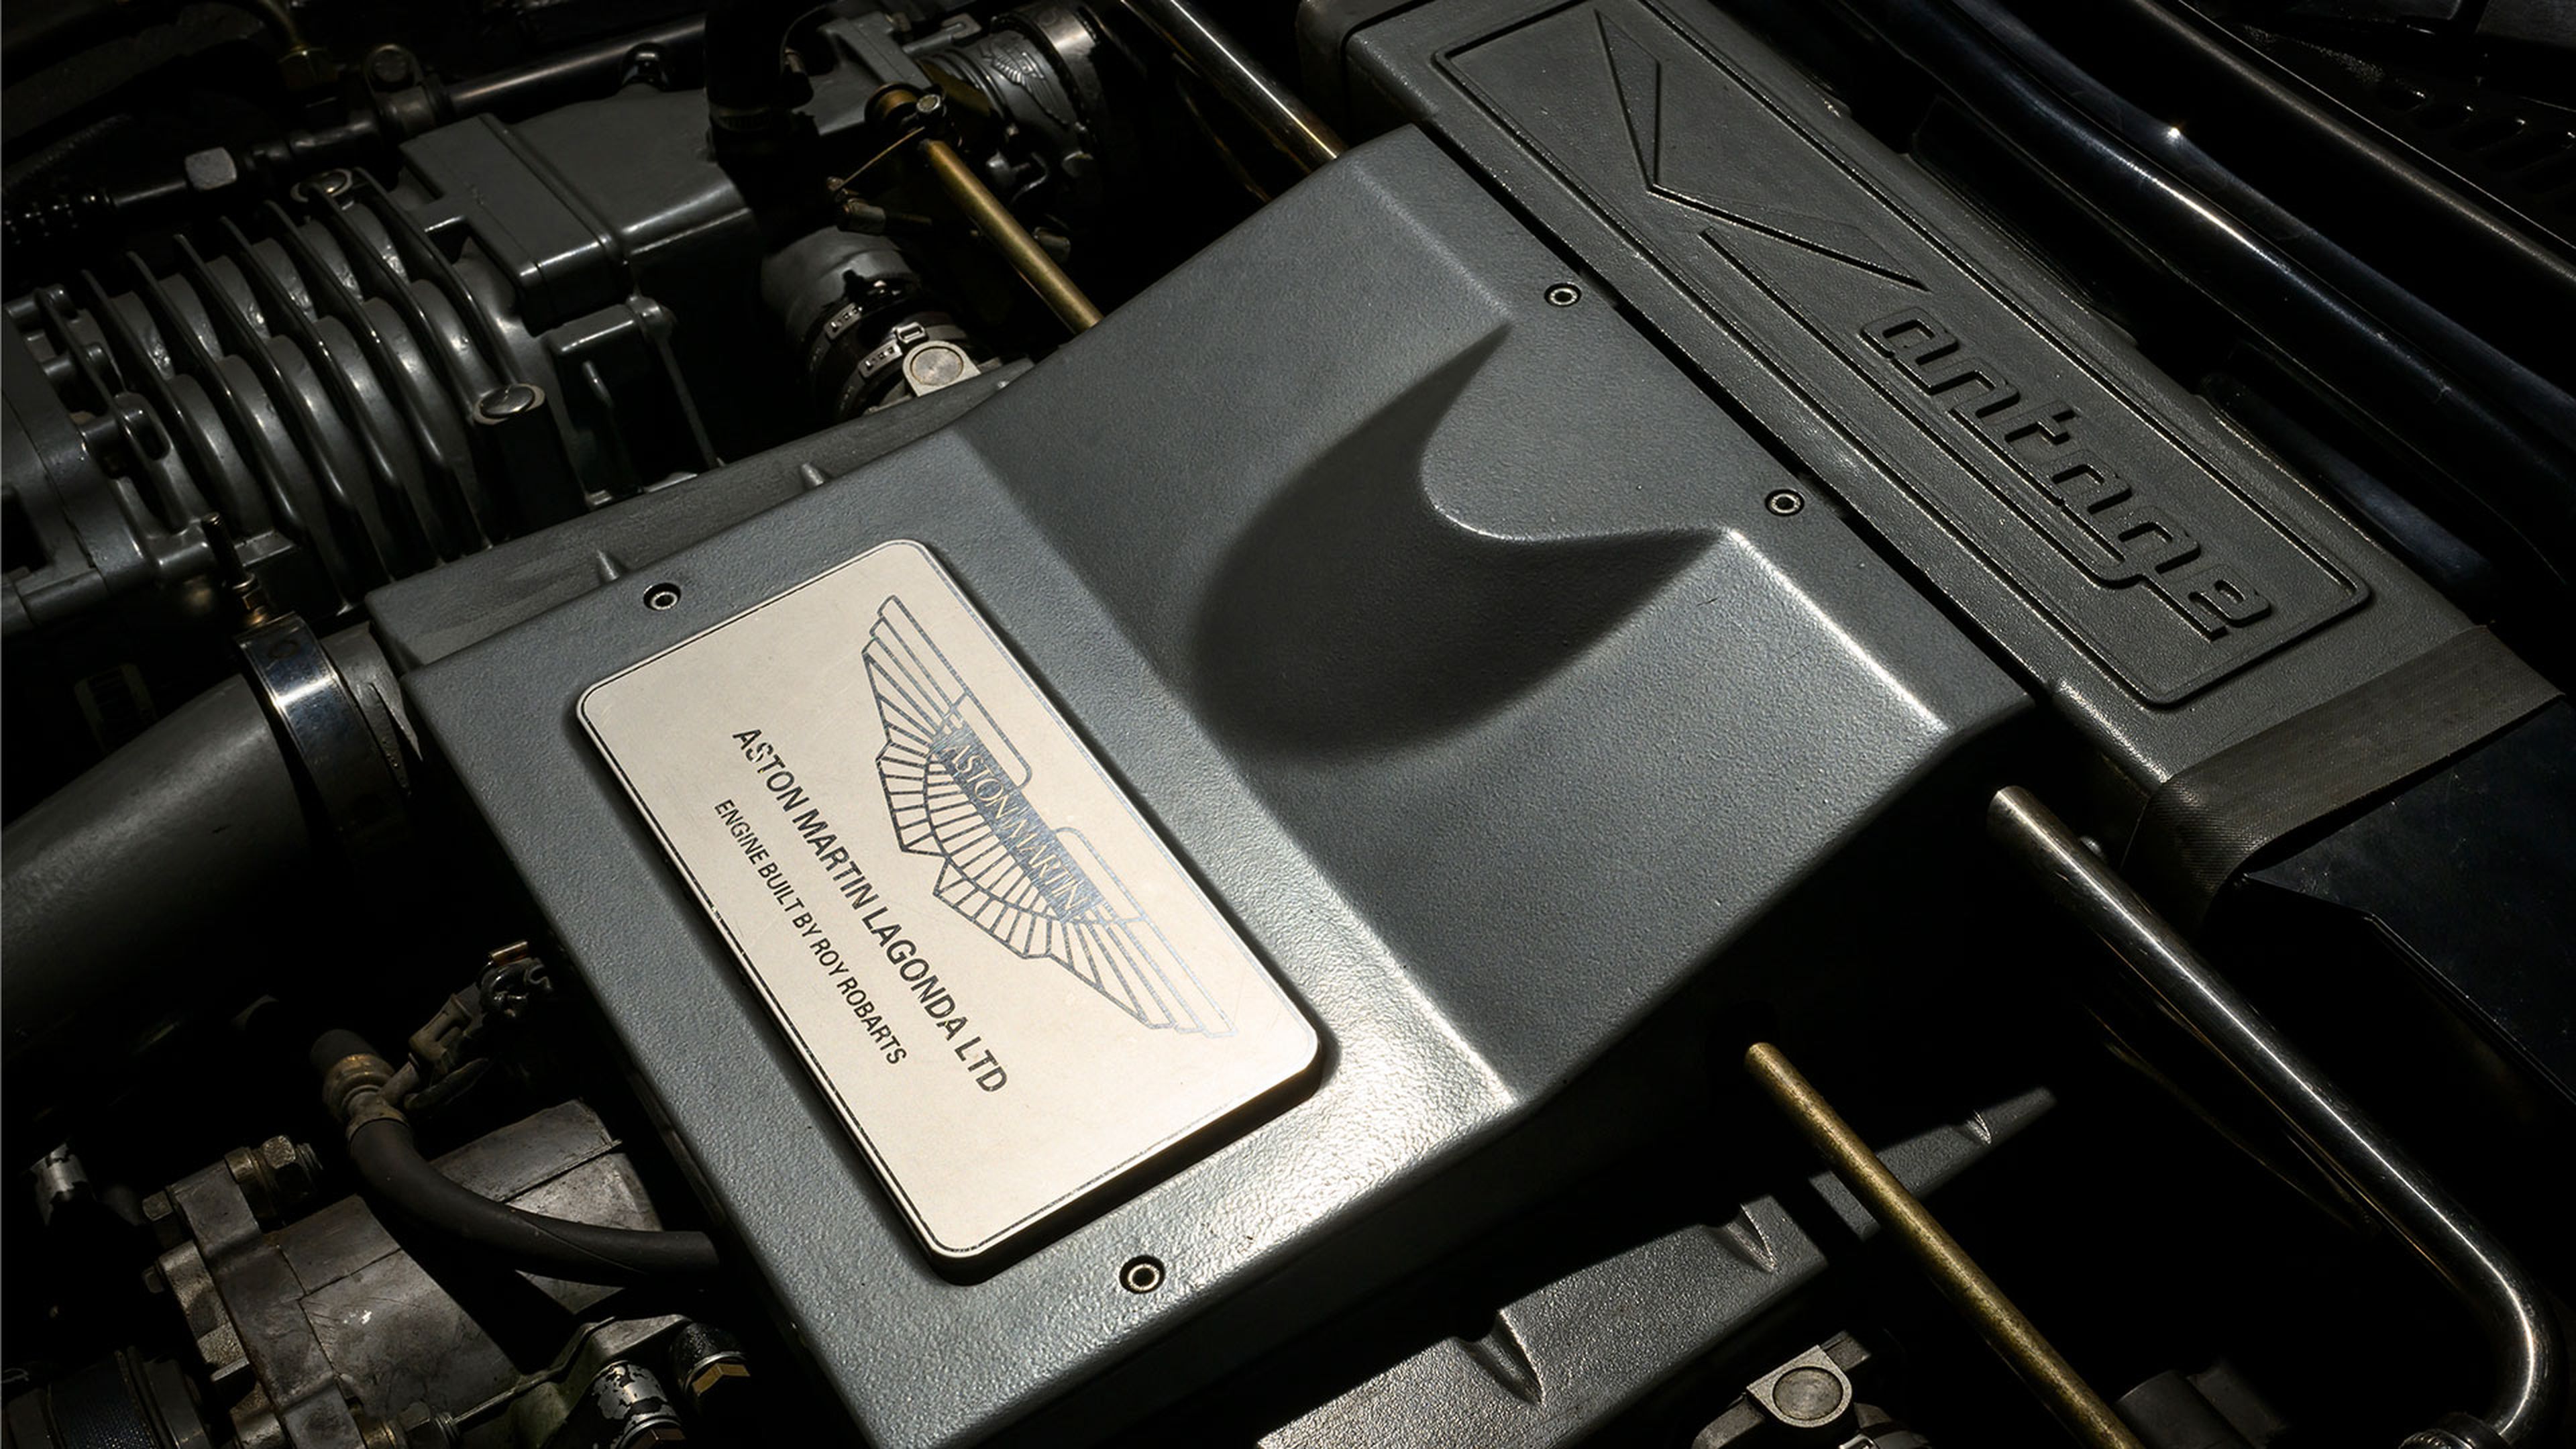 Aston Martin V8 Vantage V550